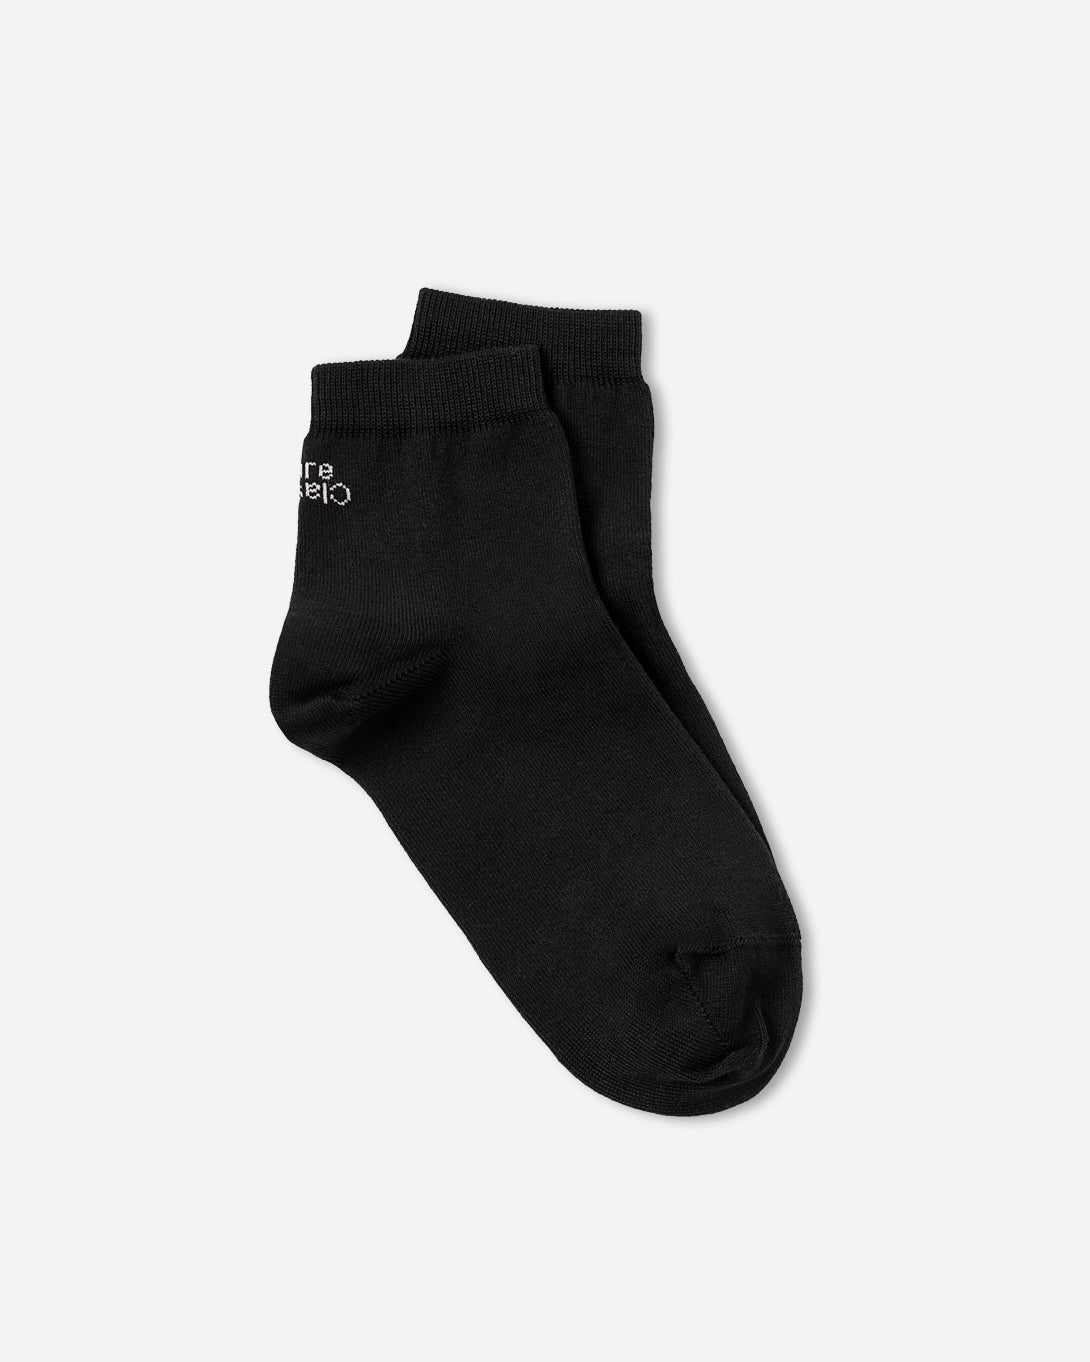 Black Quarter Socks Womens Everyday Wearable Low Sock